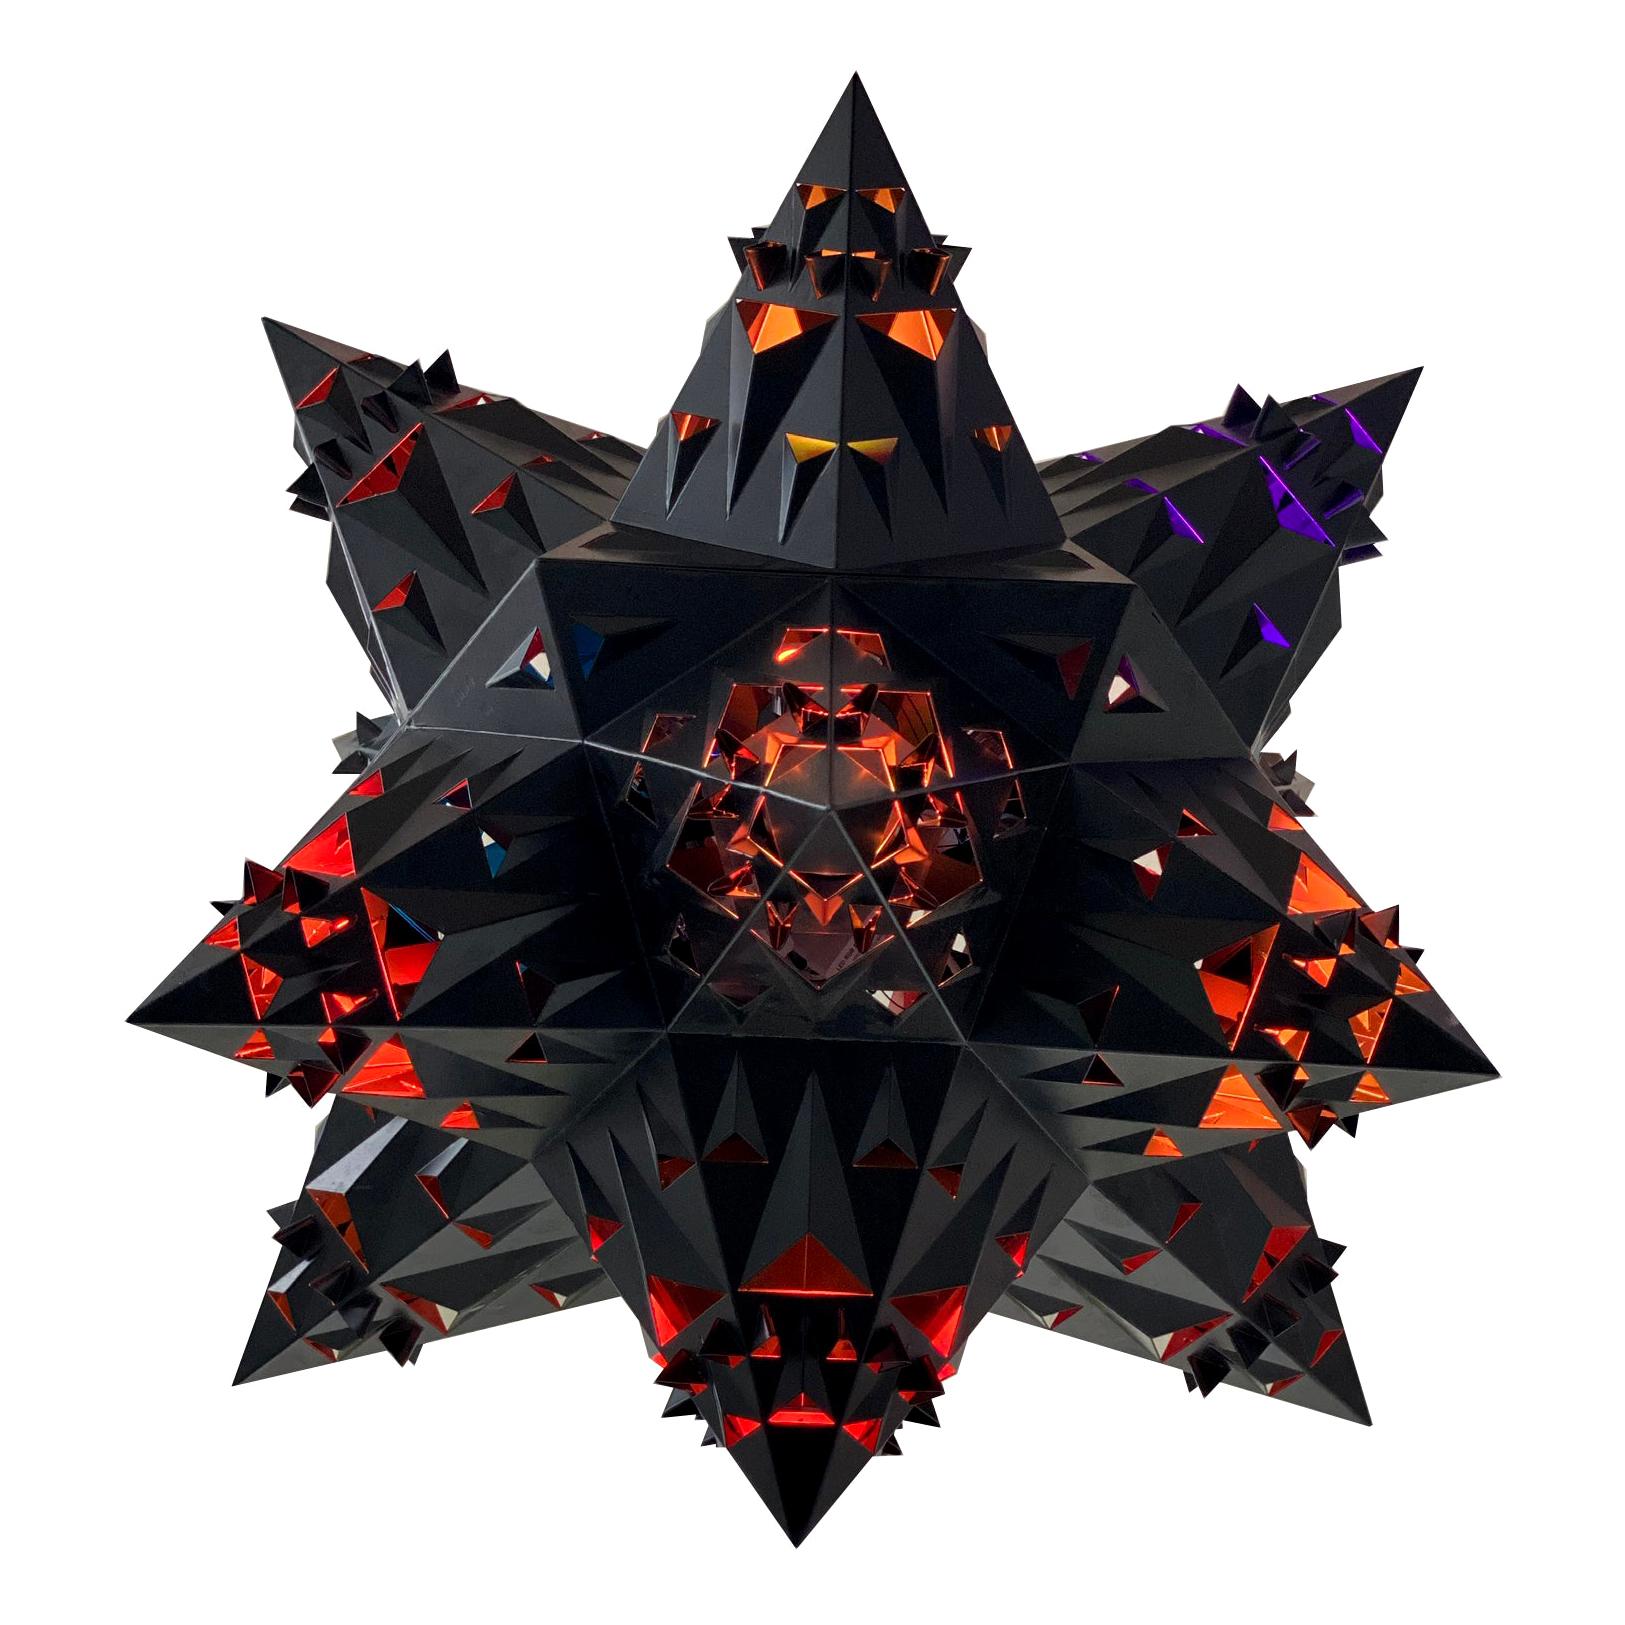 Thoscene Tetrahedron Star Chandelier For Sale